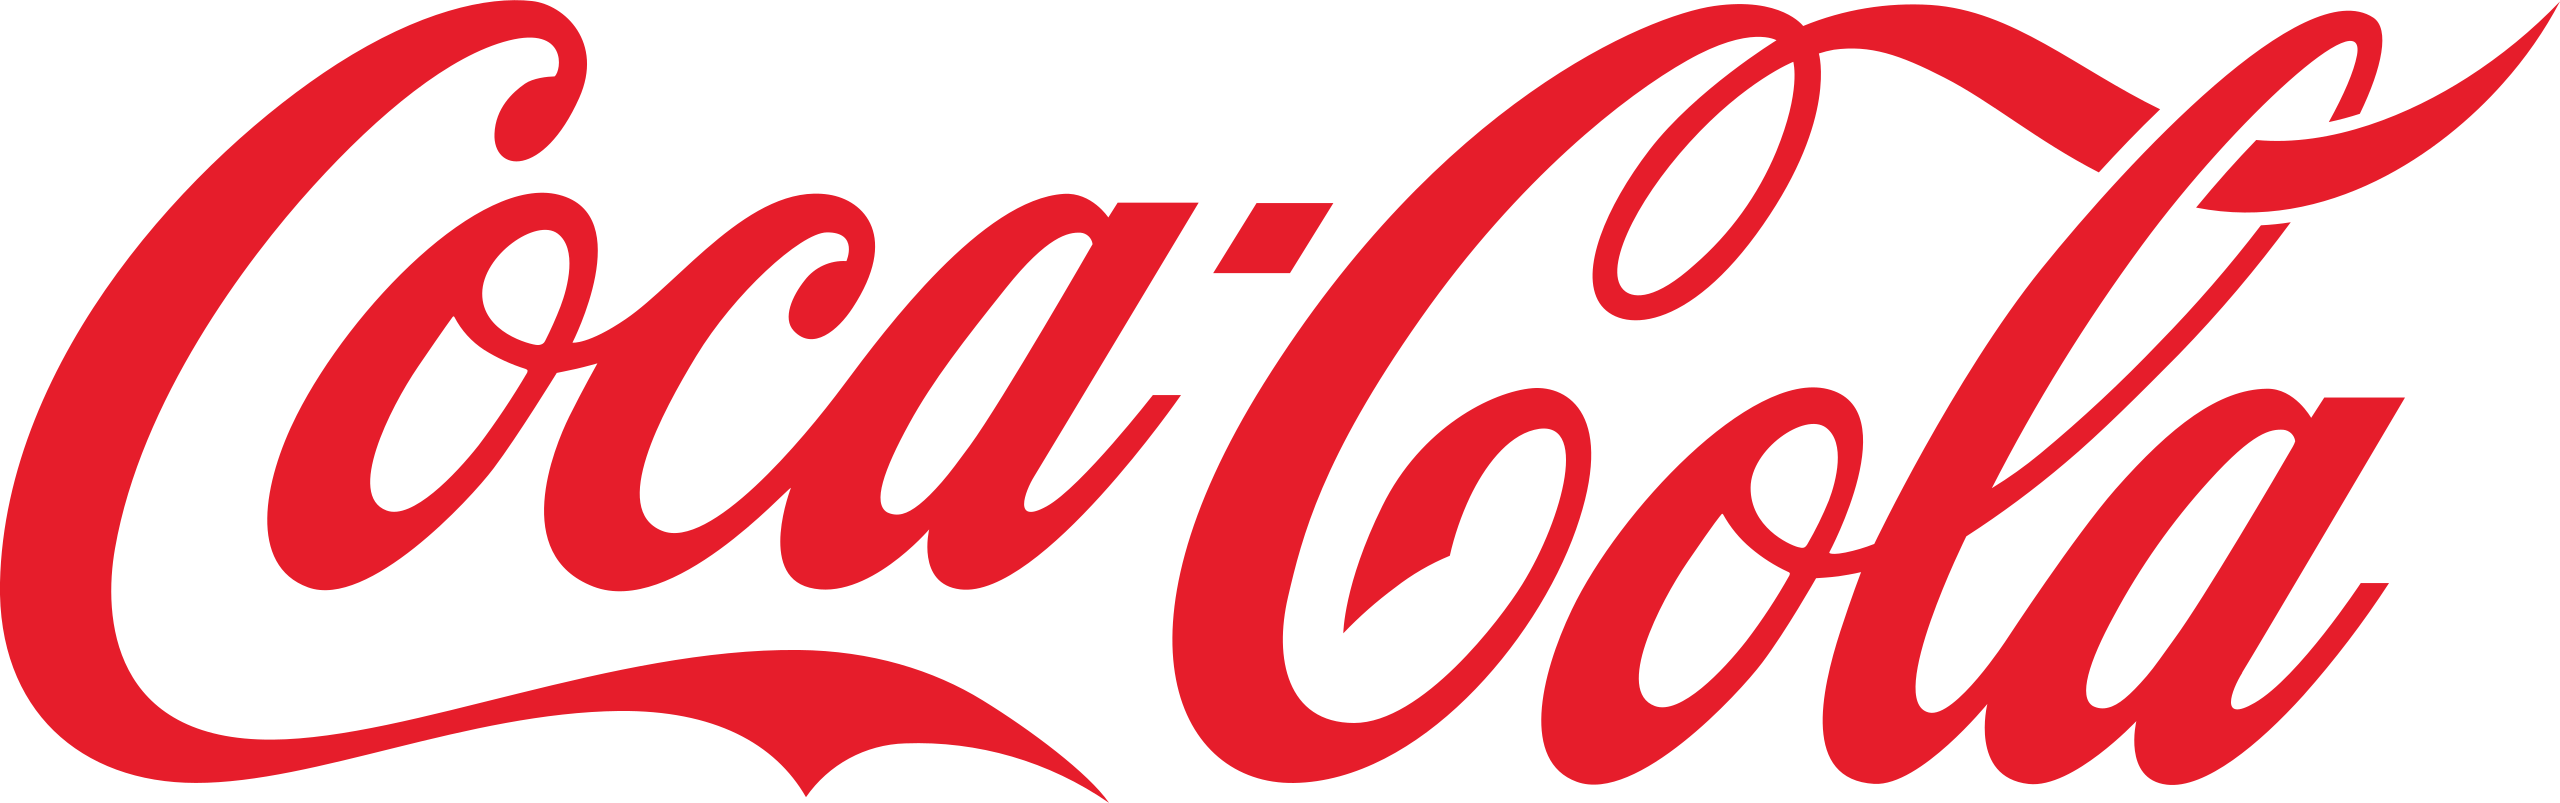 Coca Cola infolinia | Kontakt, telefon, numer, adres, dane kontaktowe